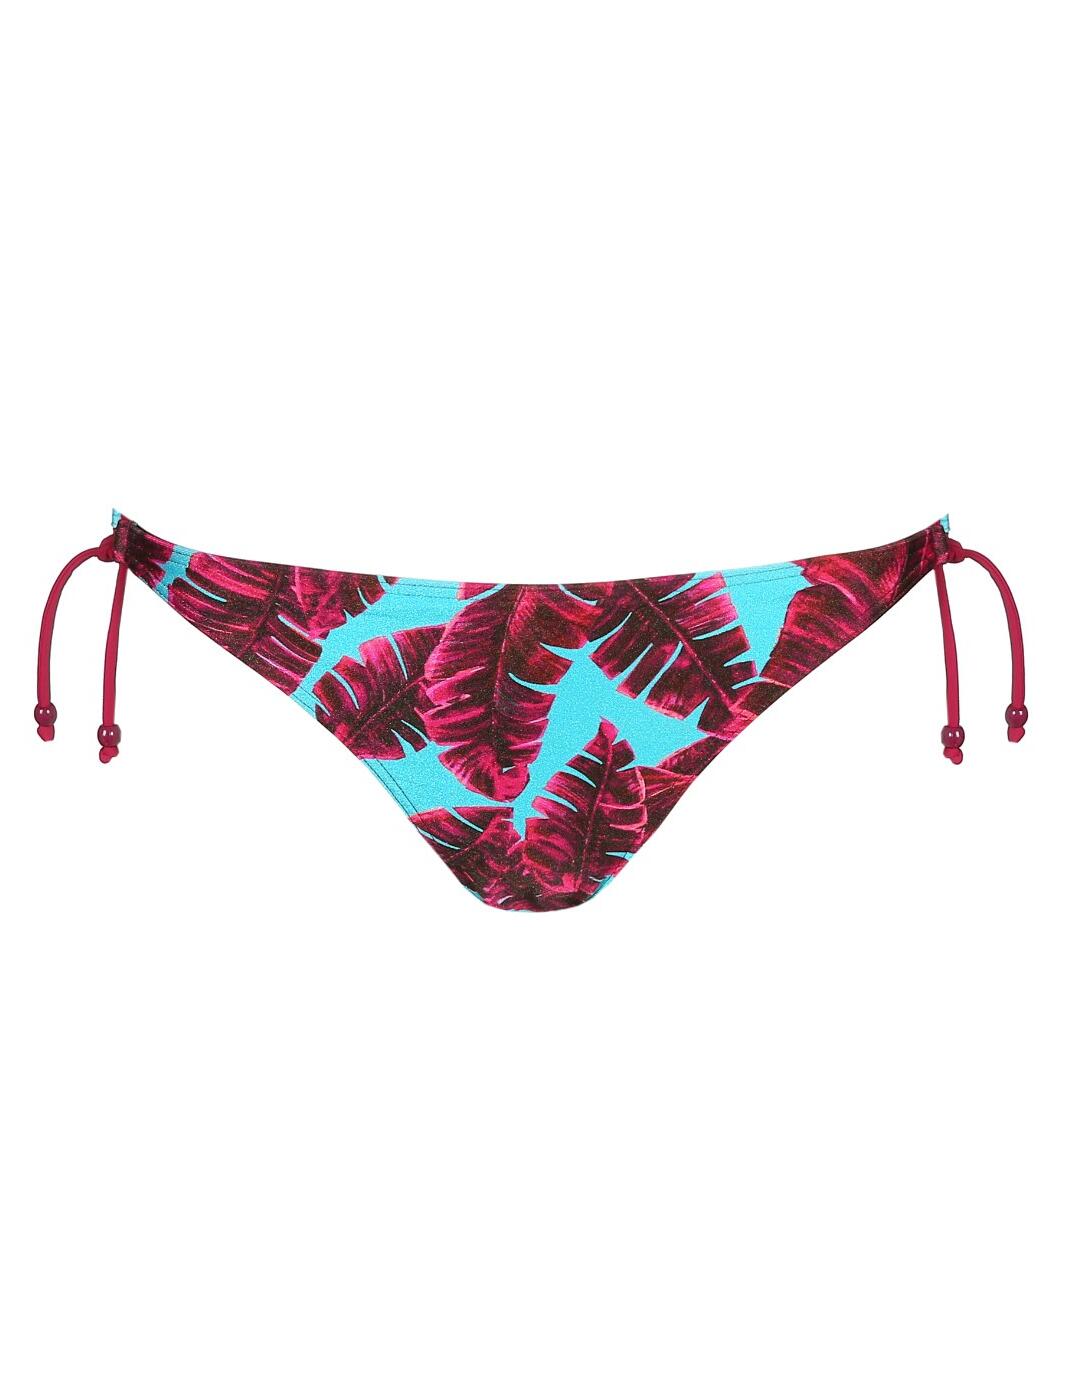 PrimaDonna Swim PALM SPRINGS pink flavor swimwear special